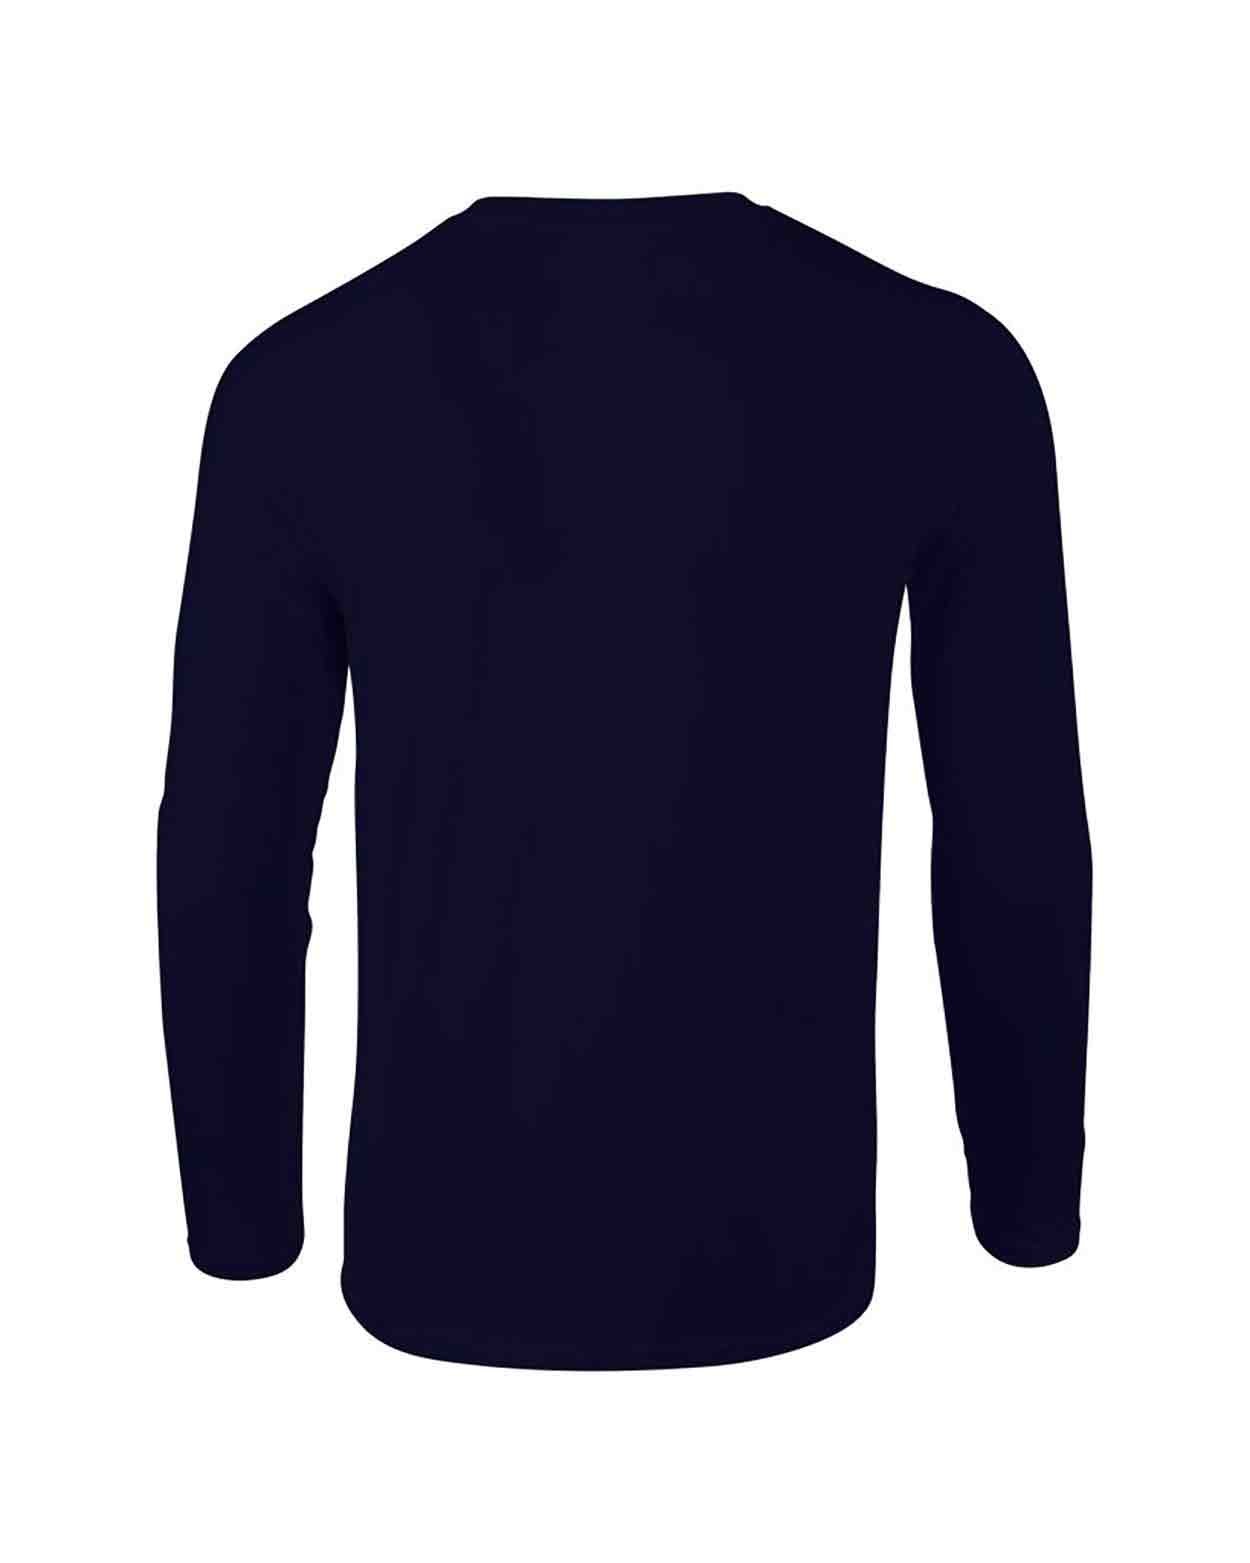 Gildan GD11 SoftStyle Long Sleeve T-Shirt - Mens Long Sleeve T-Shirts -  Unisex / Men's T Shirt Alternatives - Unisex / Men's T Shirts - T Shirts -  Leisurewear - Best Workwear